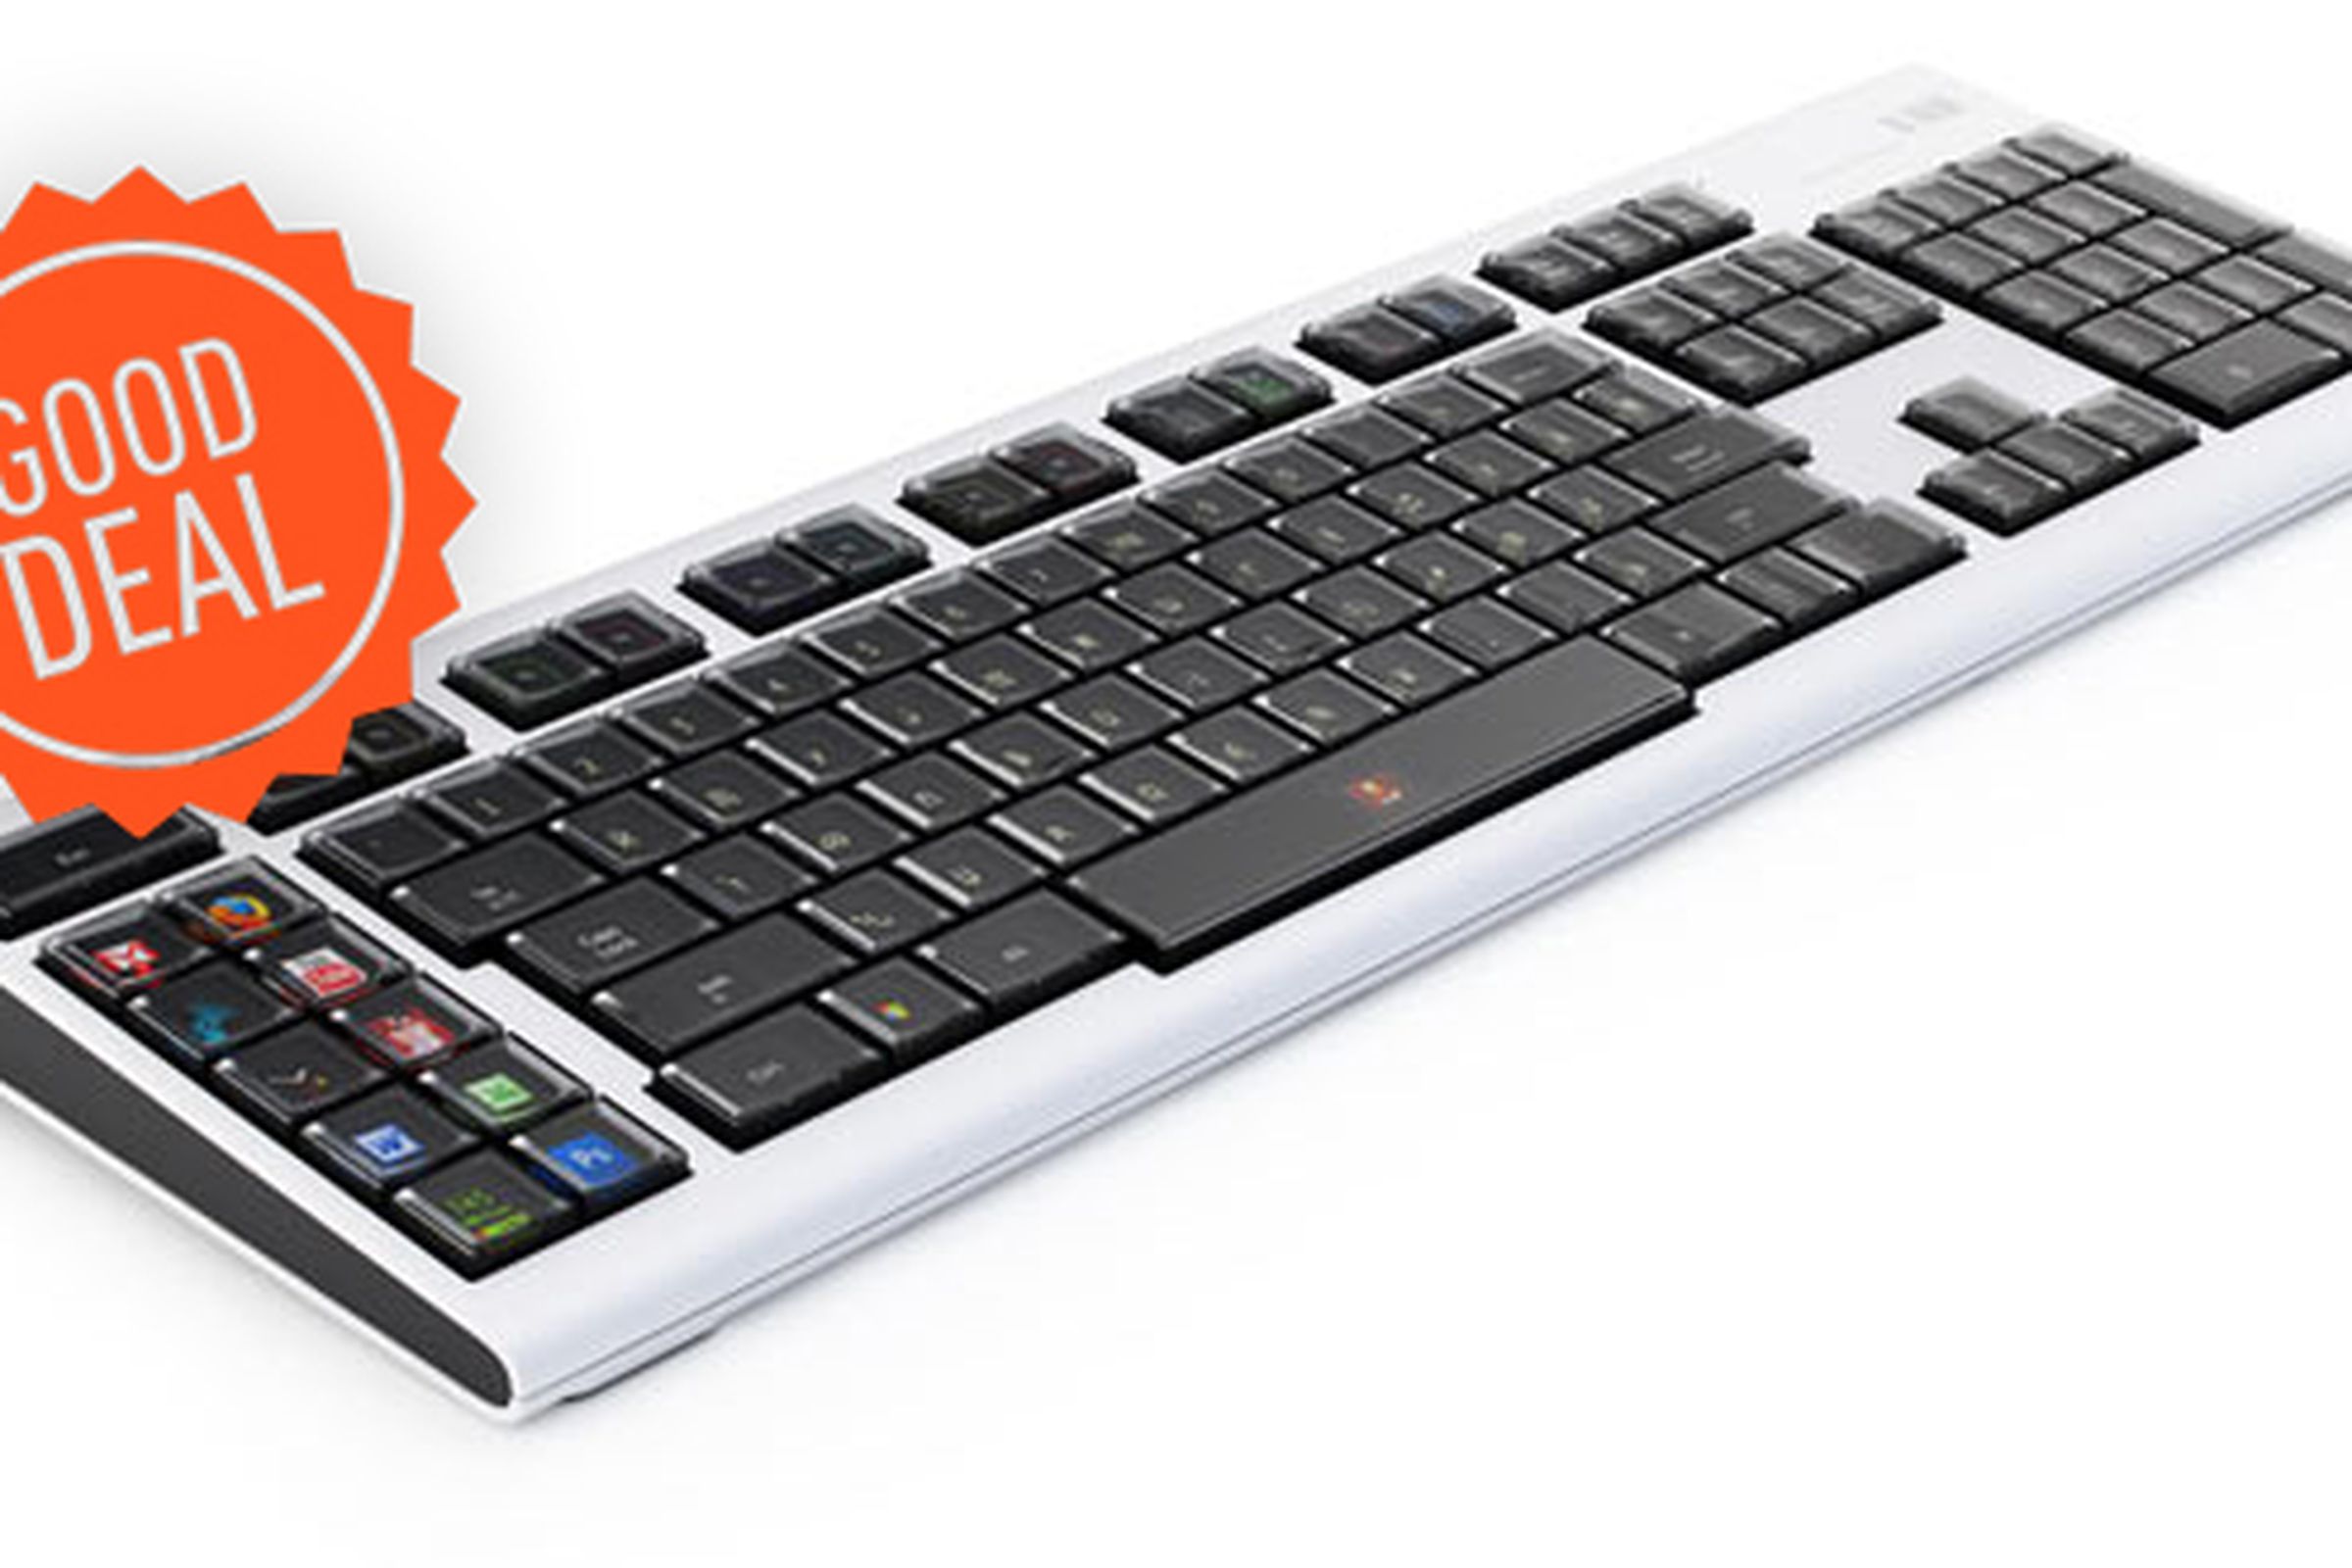 Good Deal: Optimus Keyboard